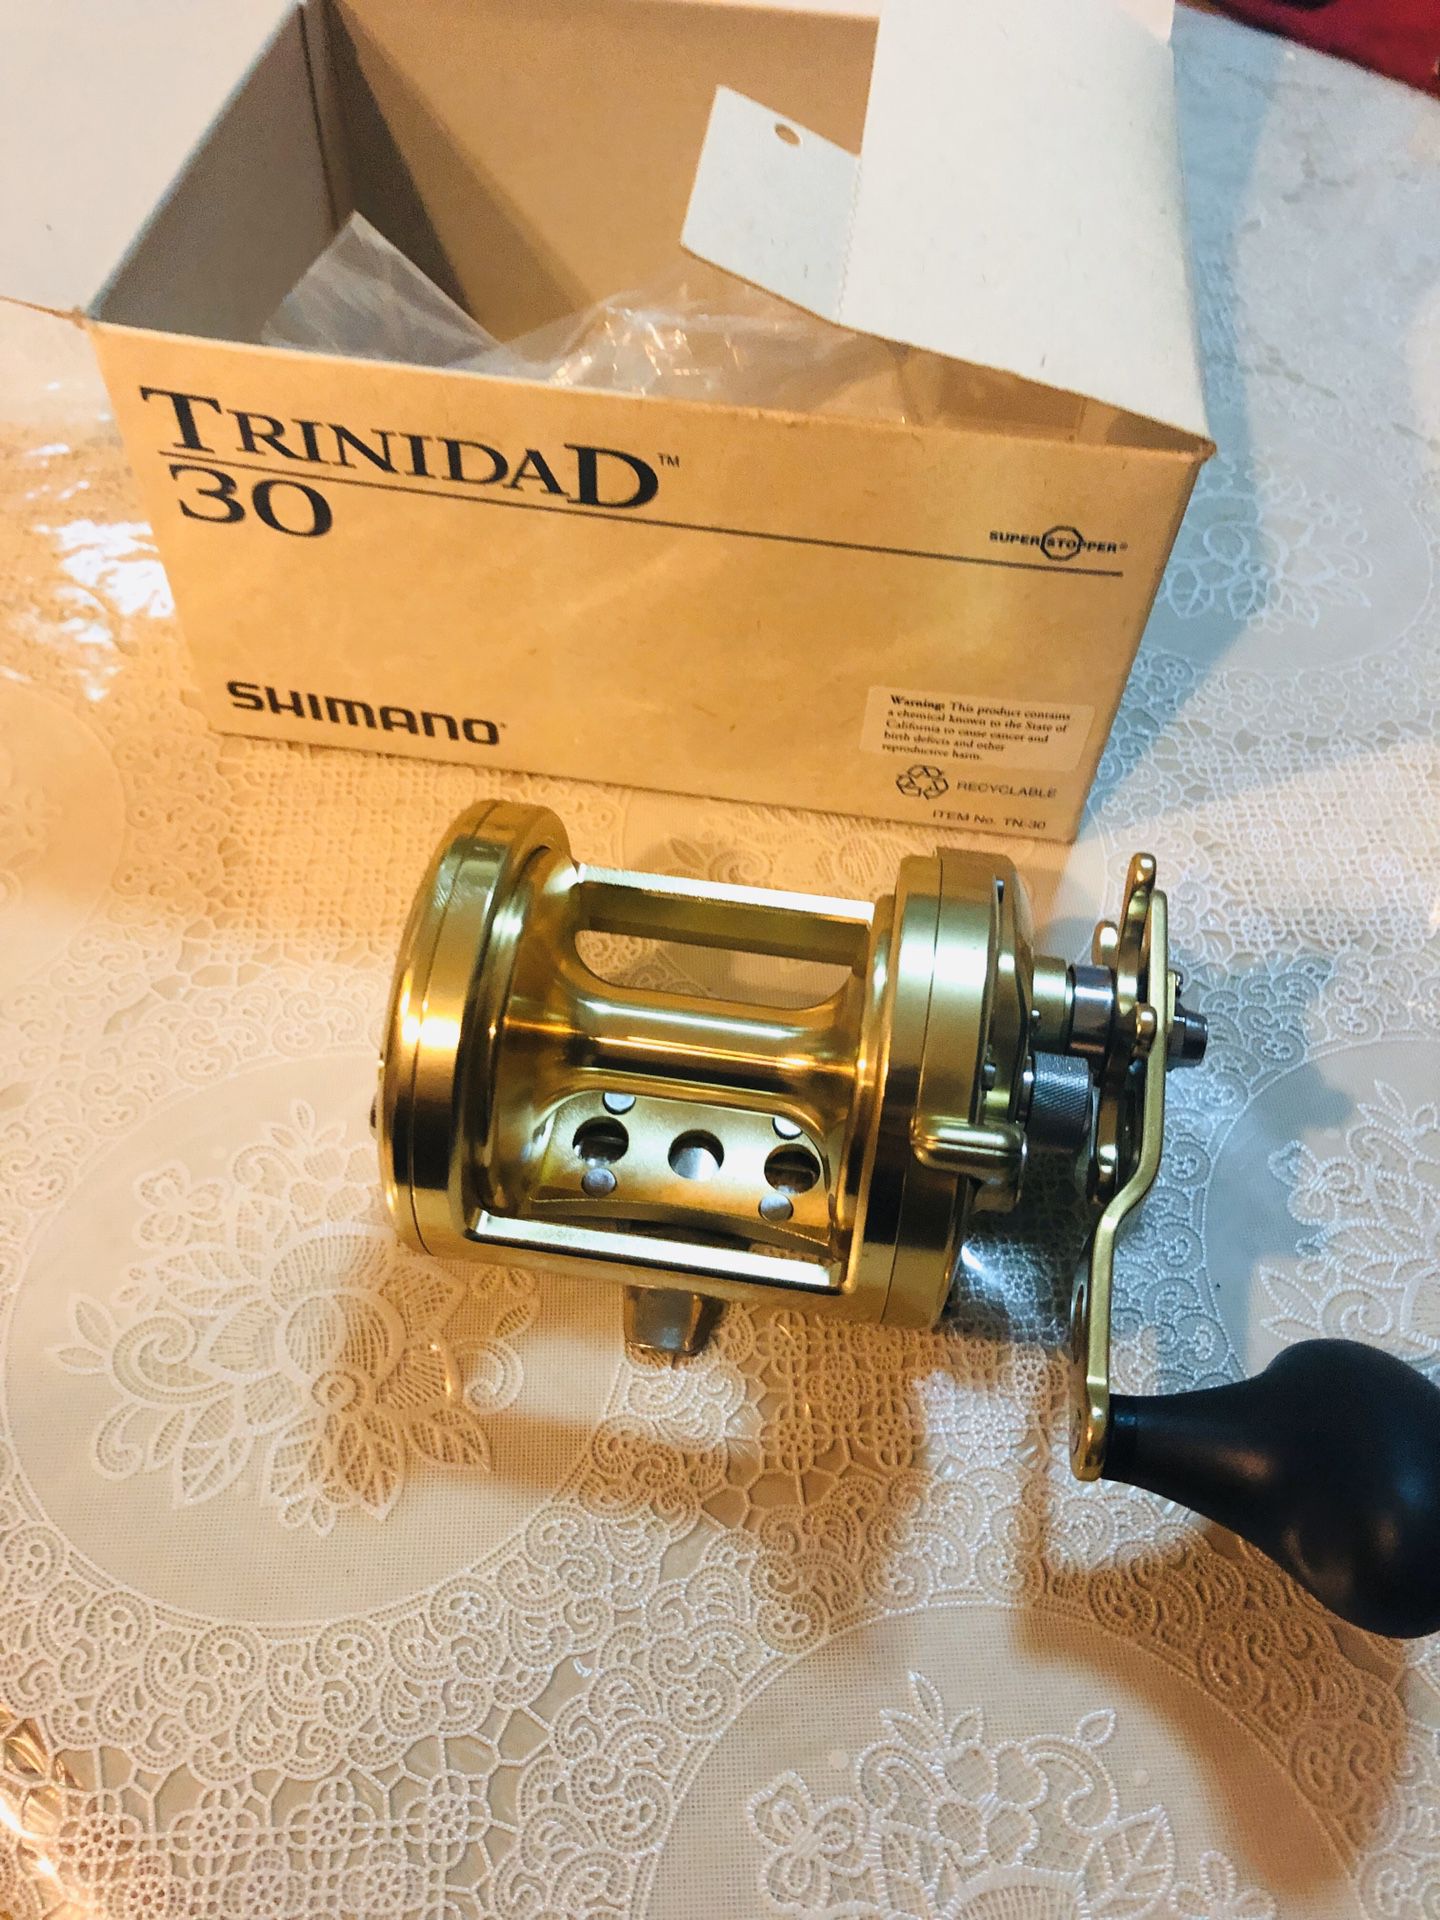 Shimano Trinidad tn 30 brand new in box $380